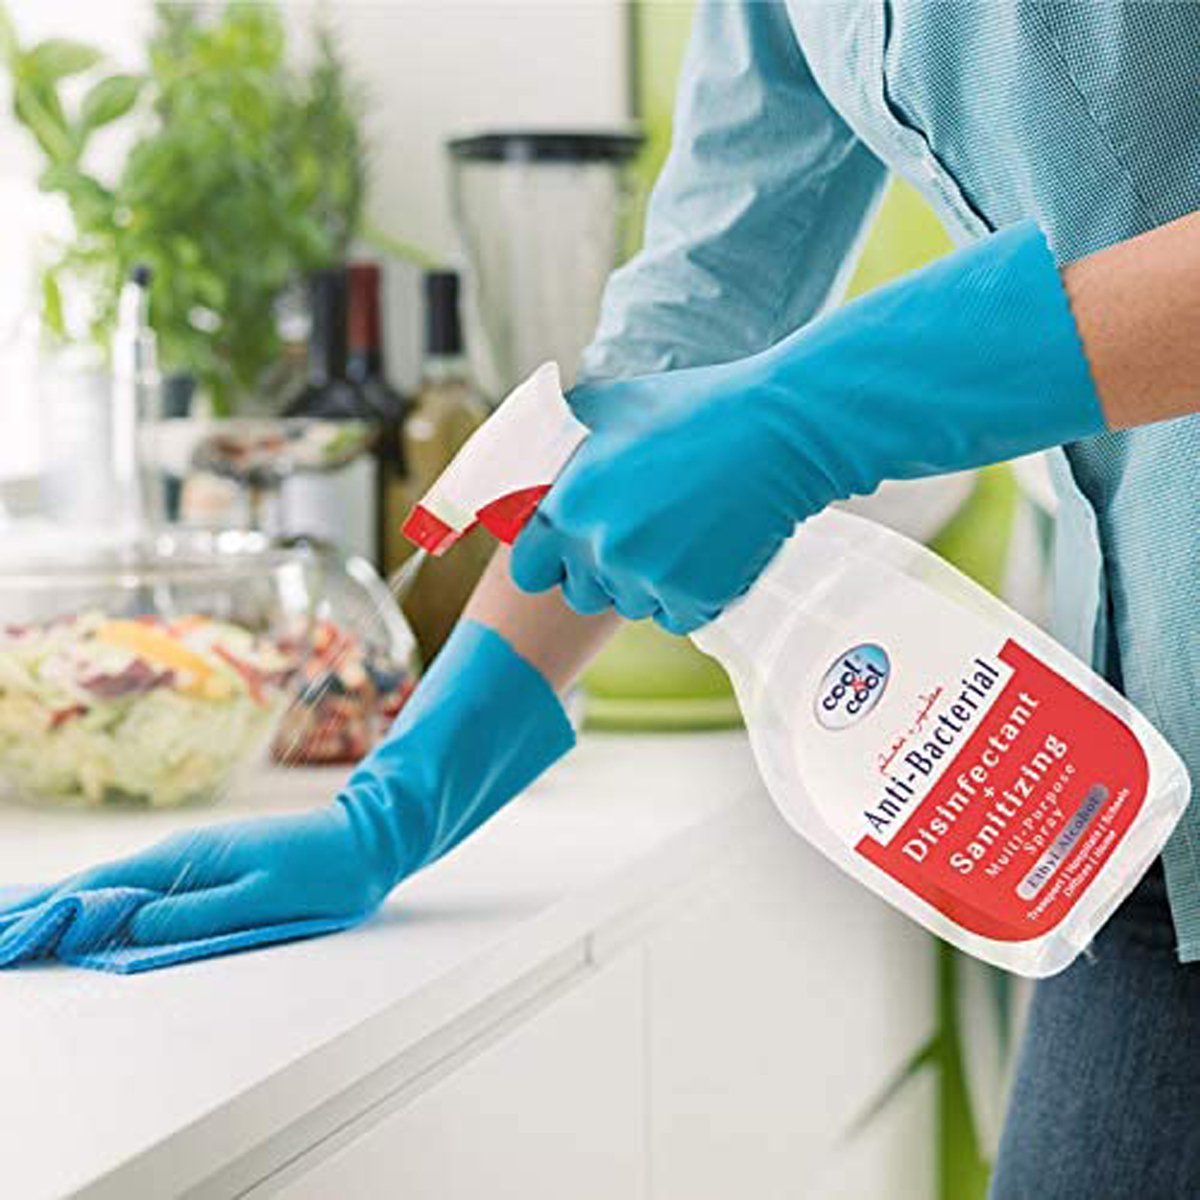 Cool &Cool Anti-Bacterial Disinfectant + Sanitizing Multi-Purpose Spray, 750 ml